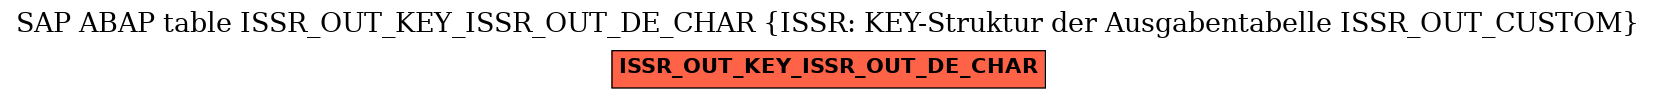 E-R Diagram for table ISSR_OUT_KEY_ISSR_OUT_DE_CHAR (ISSR: KEY-Struktur der Ausgabentabelle ISSR_OUT_CUSTOM)